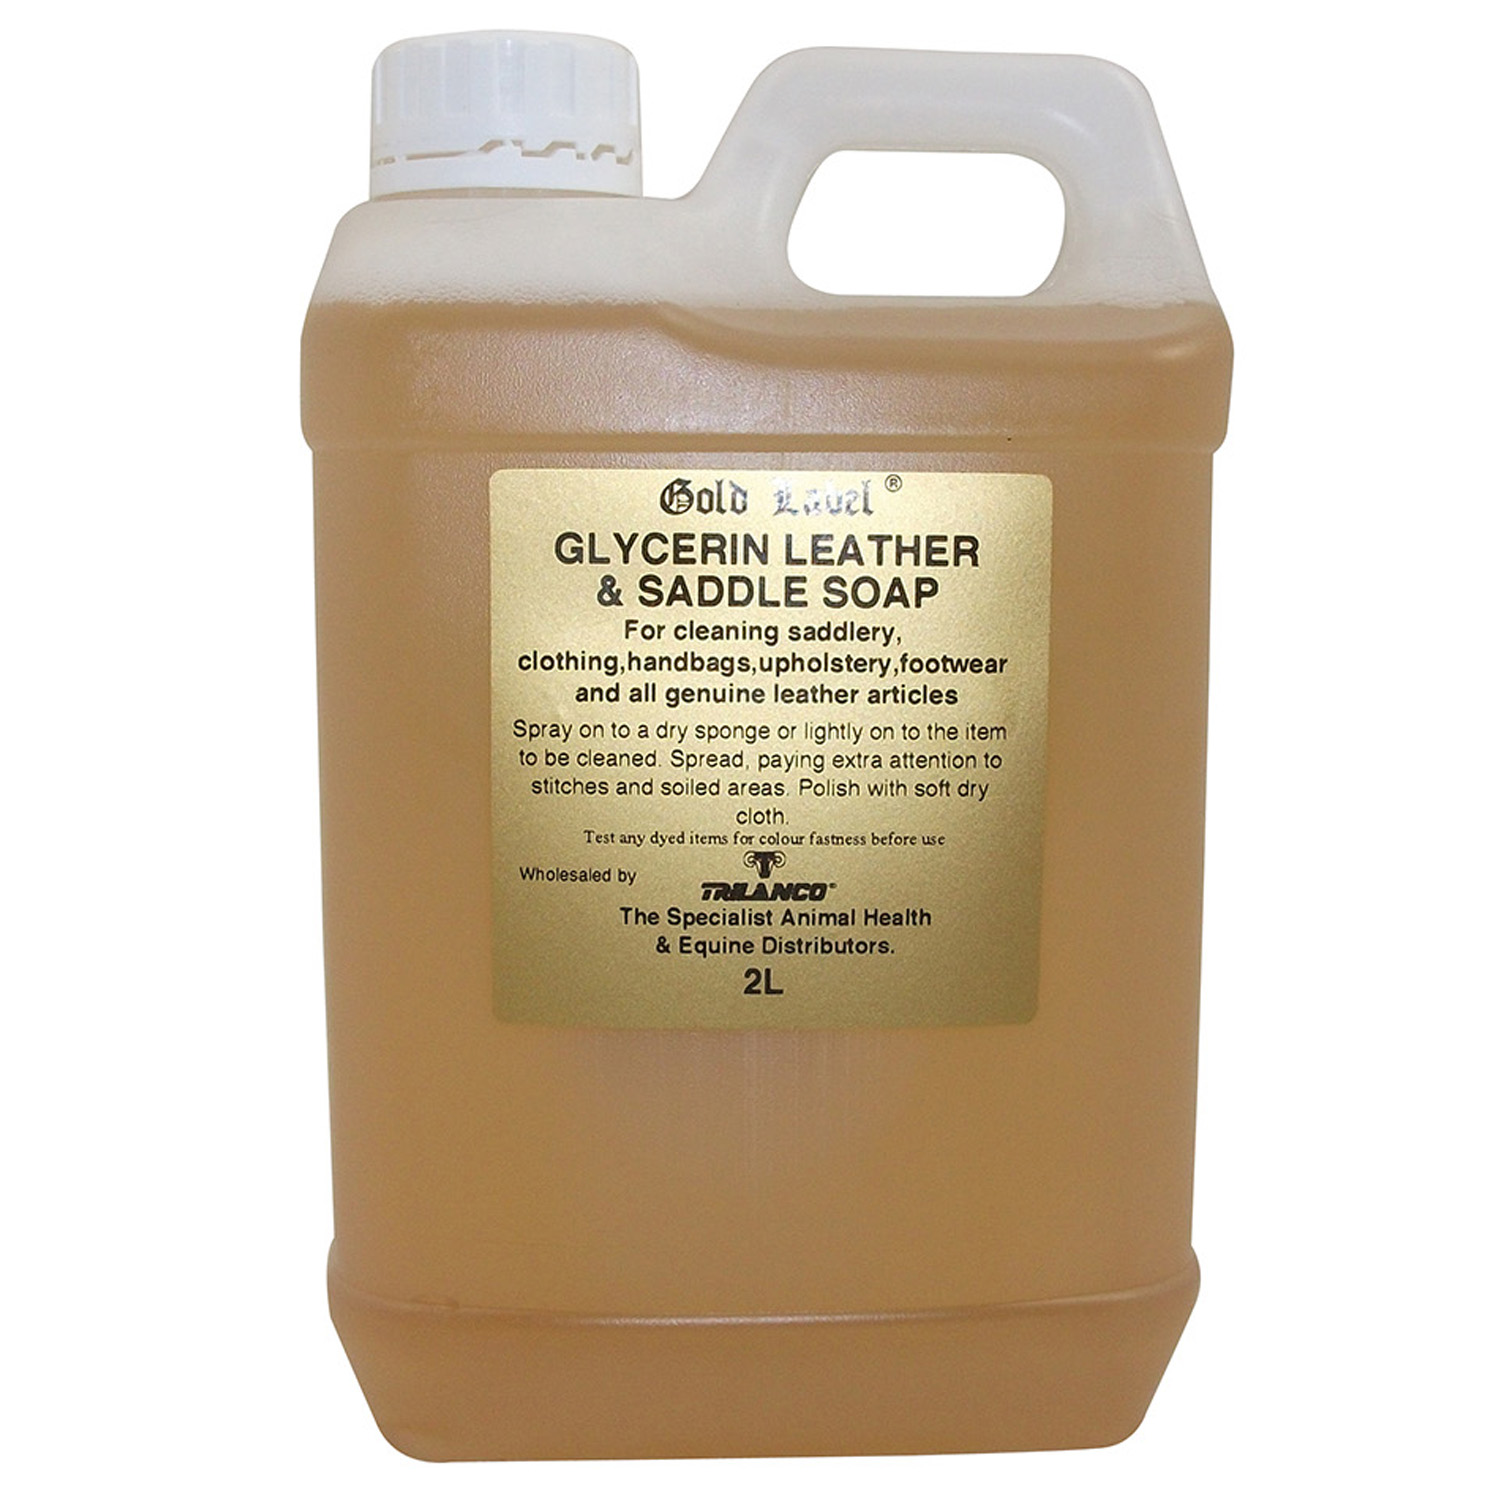 GOLD LABEL GLYCERIN LEATHER & SADDLE SOAP LIQUID 2 LT 2 LT